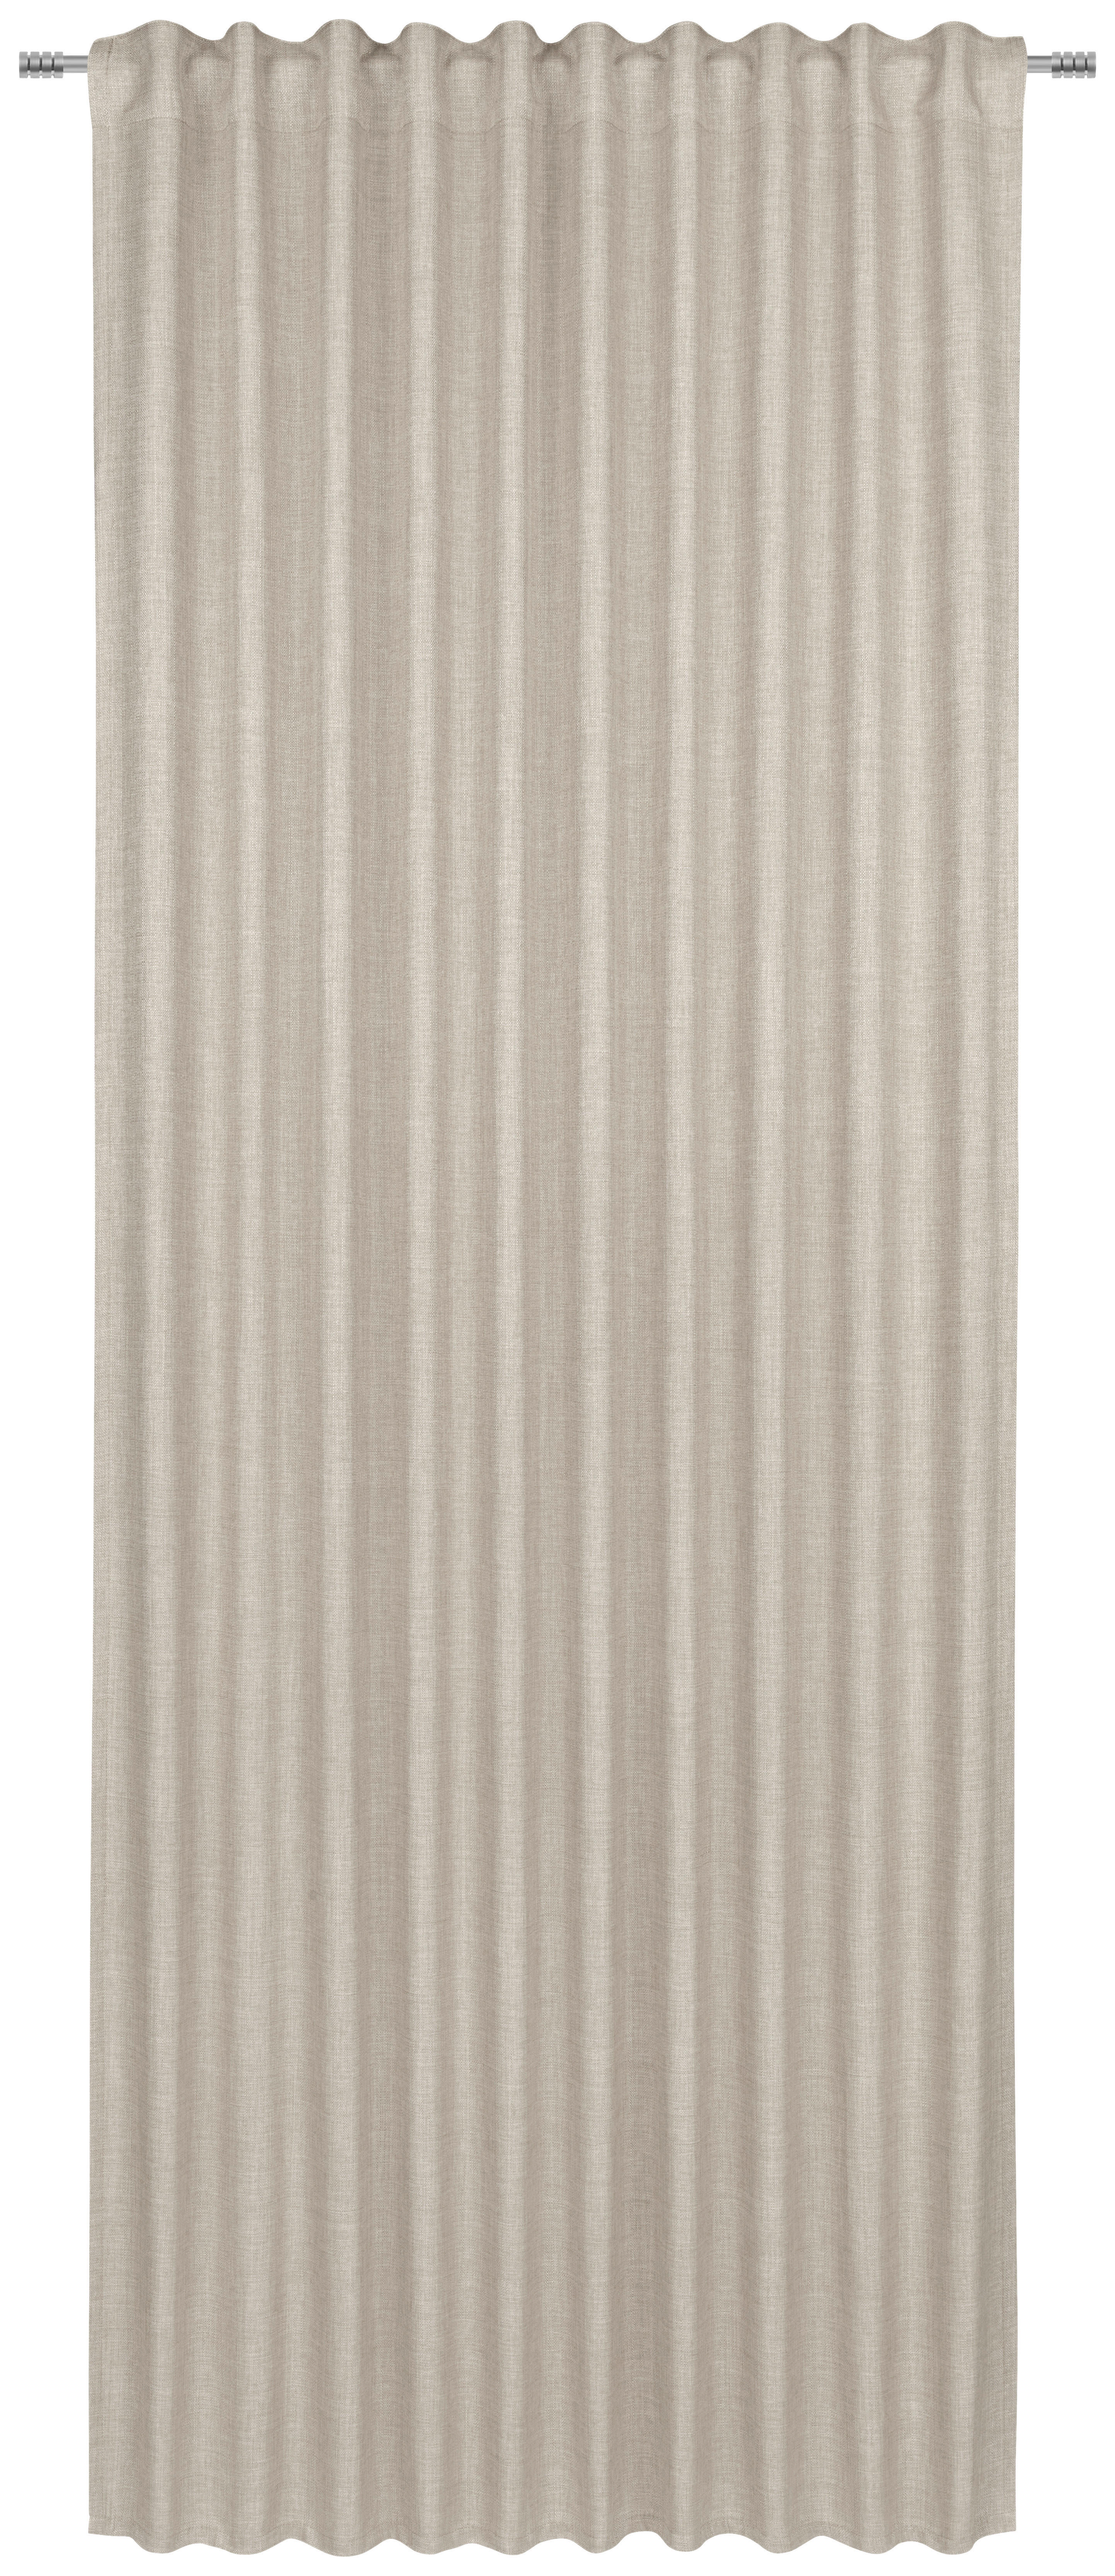 FERTIGVORHANG FREDDY blickdicht 140/245 cm   - Beige, Basics, Textil (140/245cm) - Boxxx